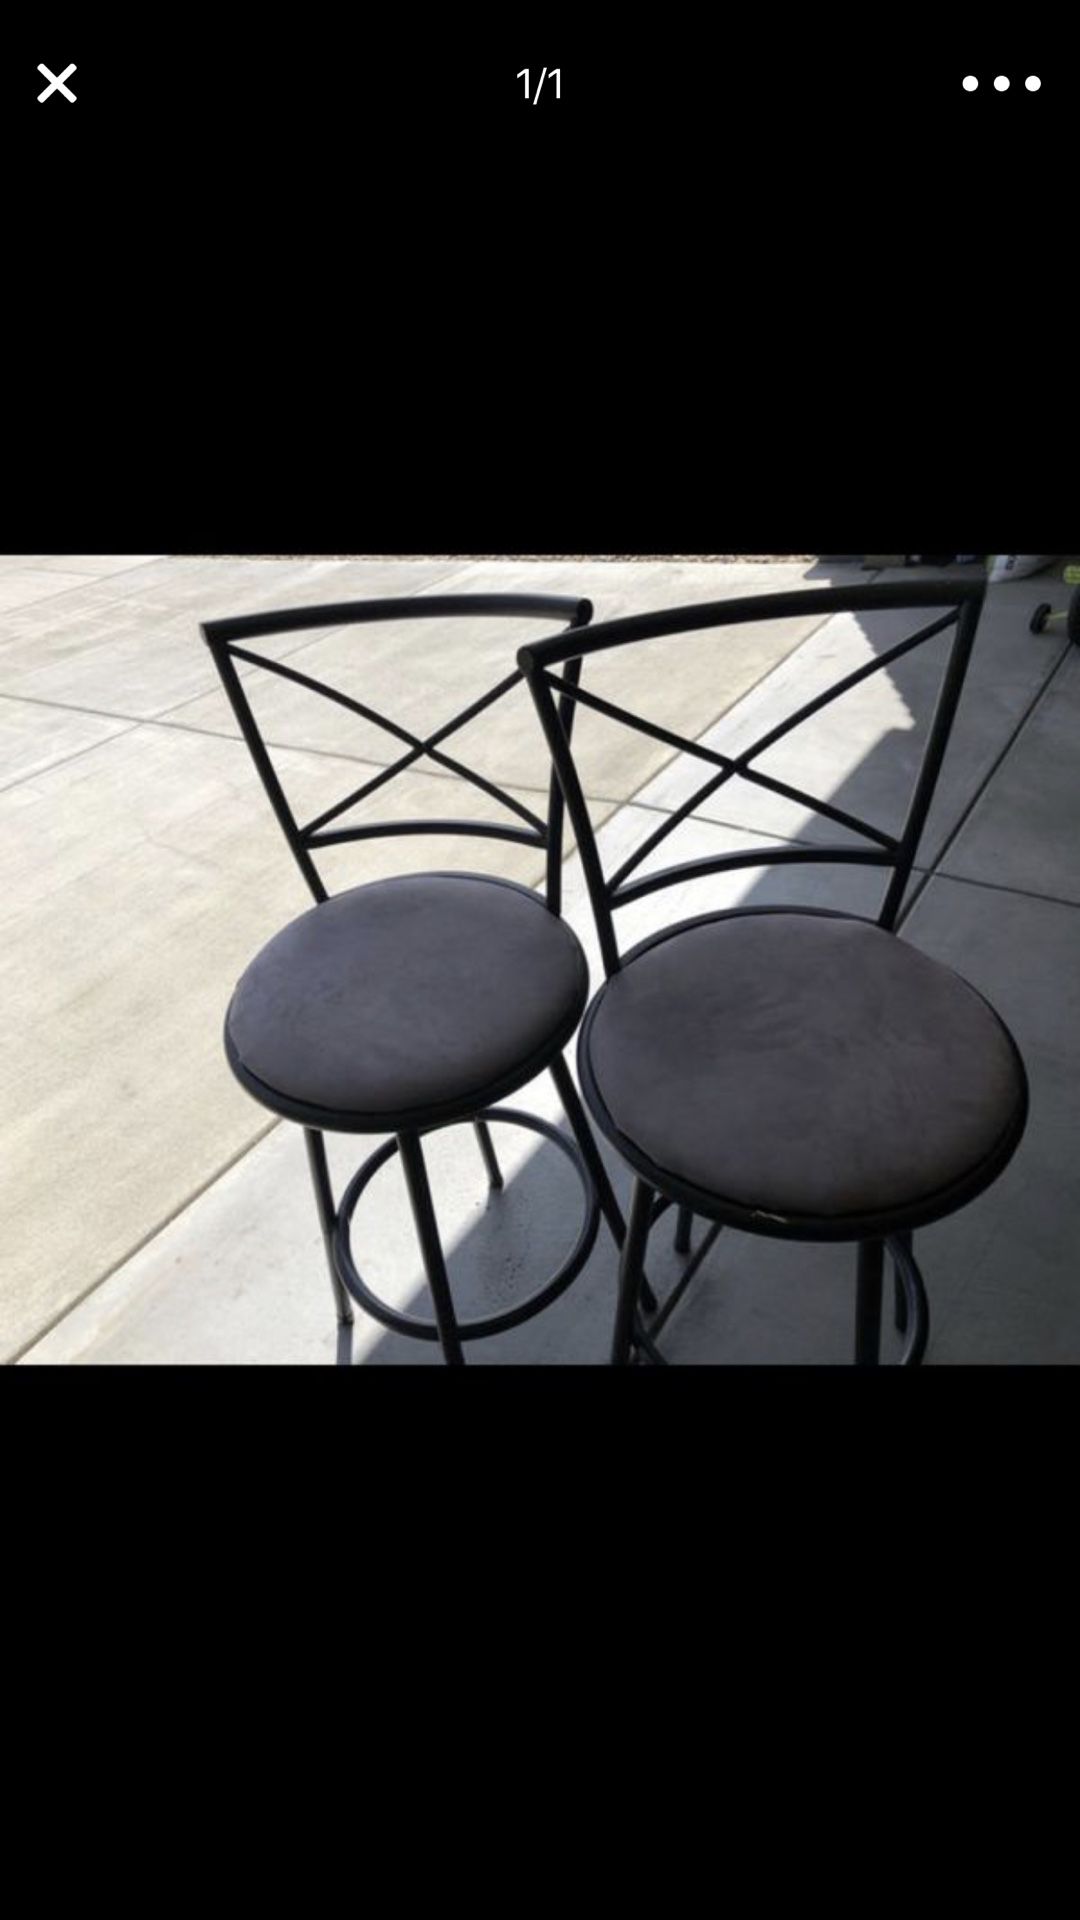 Grey bar stools